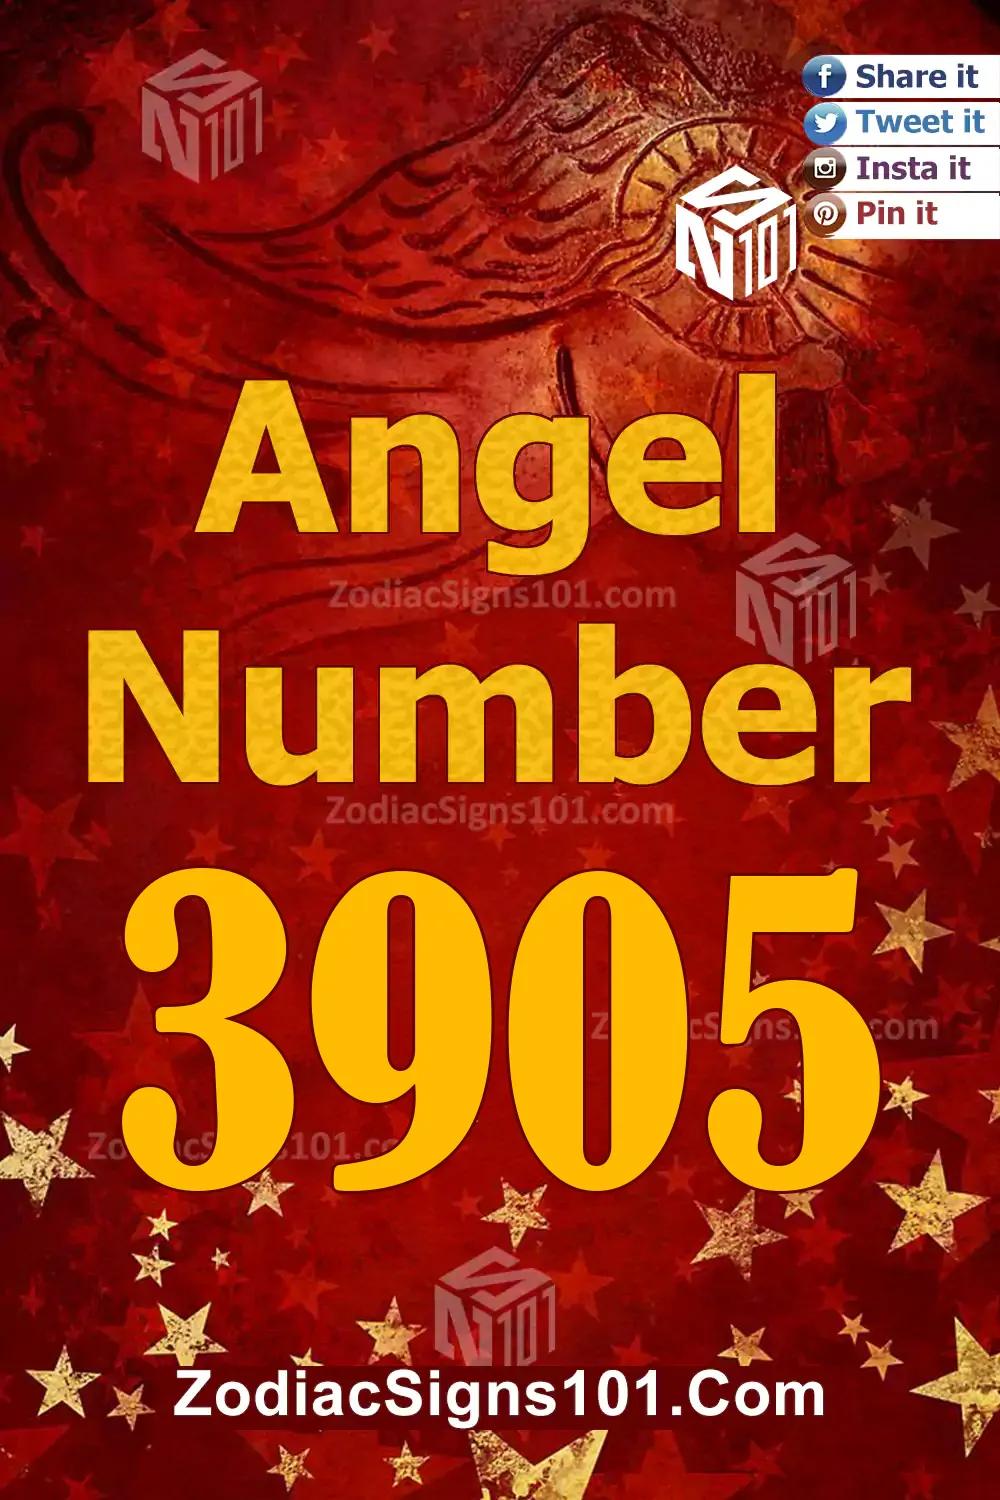 3905-Angel-Number-Meaning.jpg